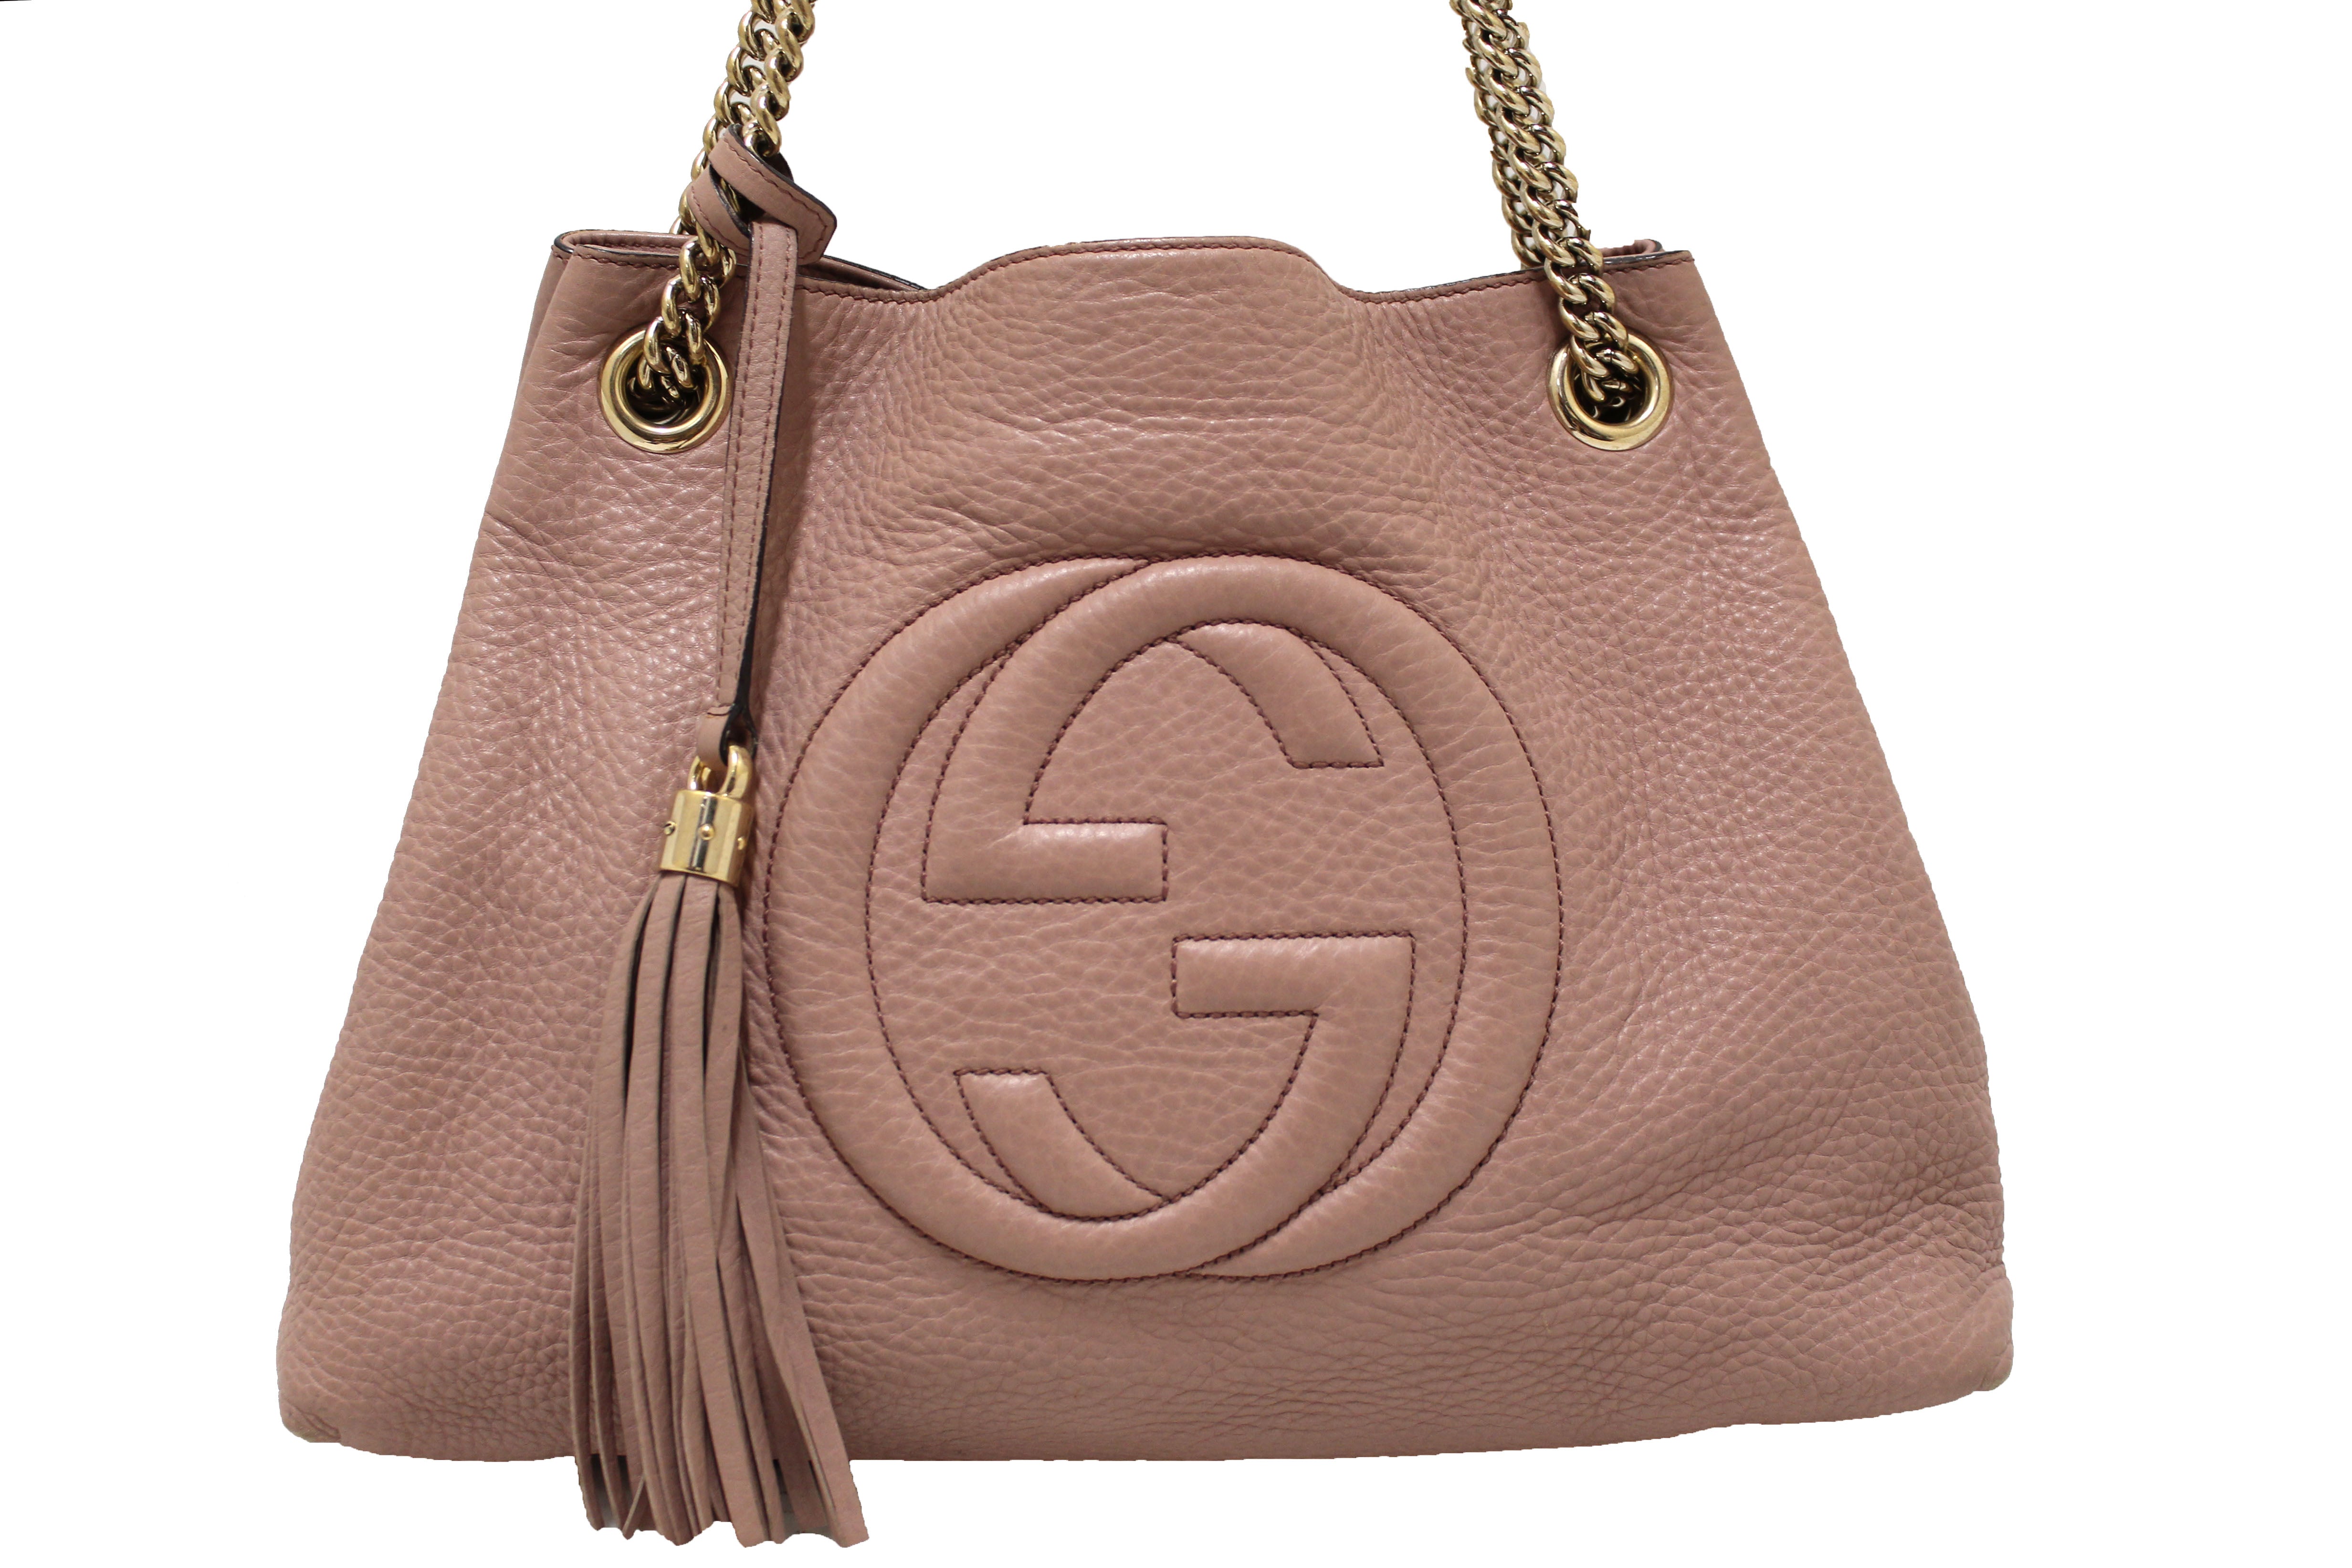 pink gucci sling bag